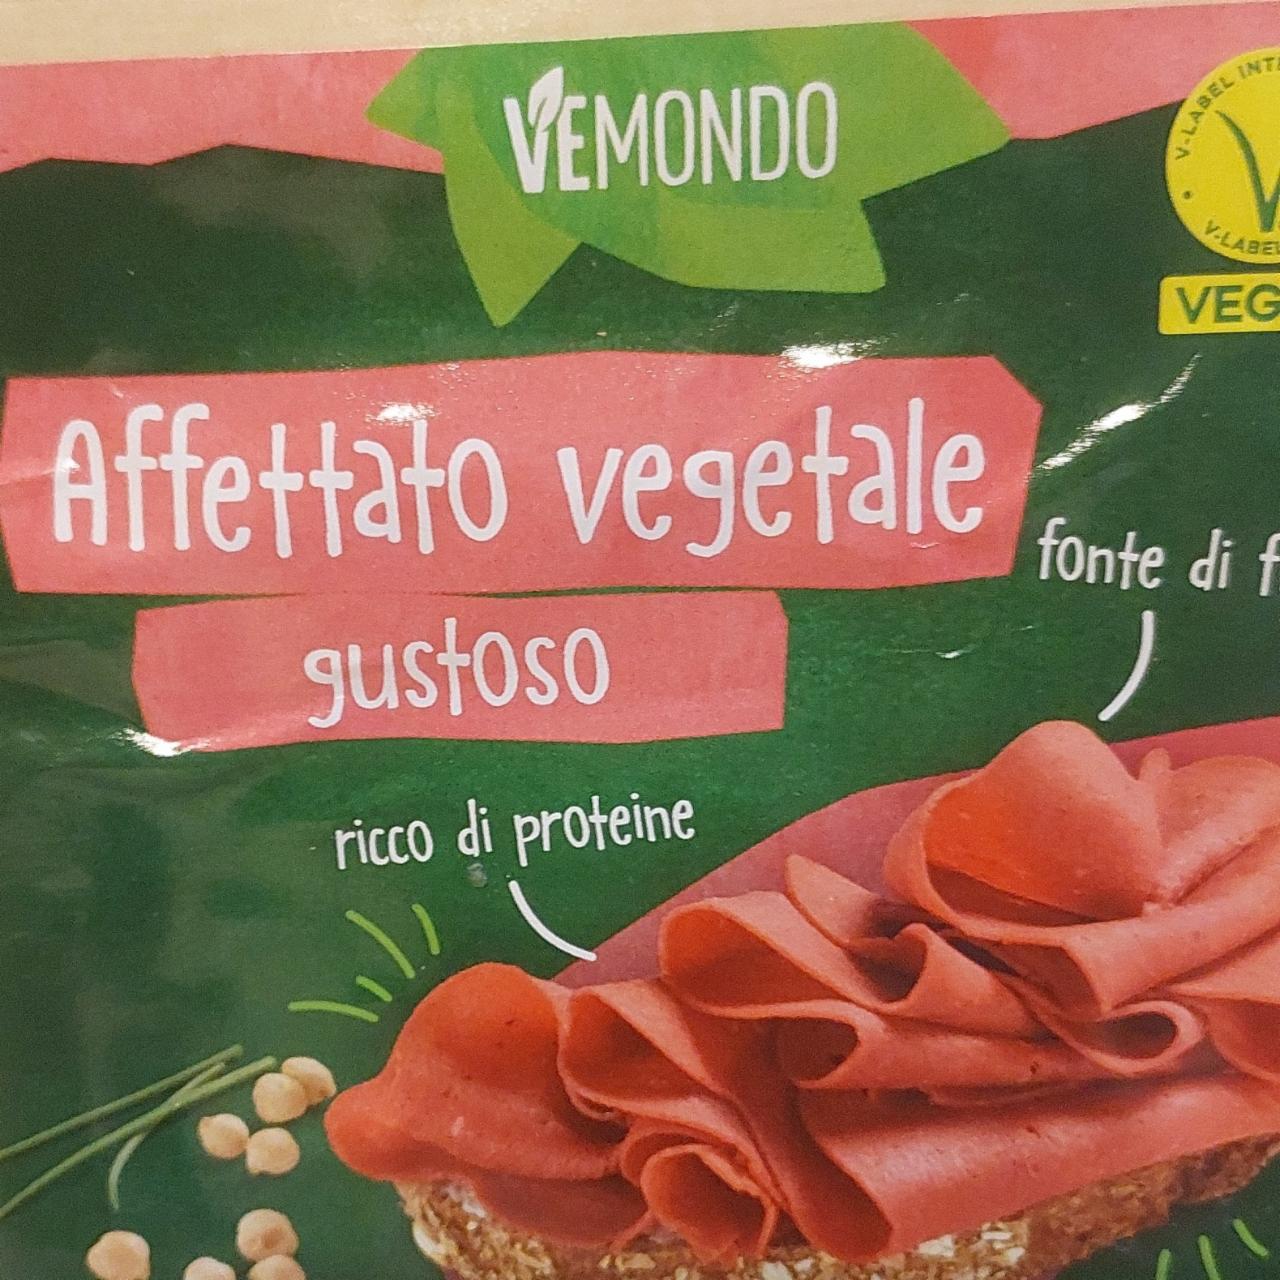 Zdjęcia - Affettato vegetale gusto Vemondo